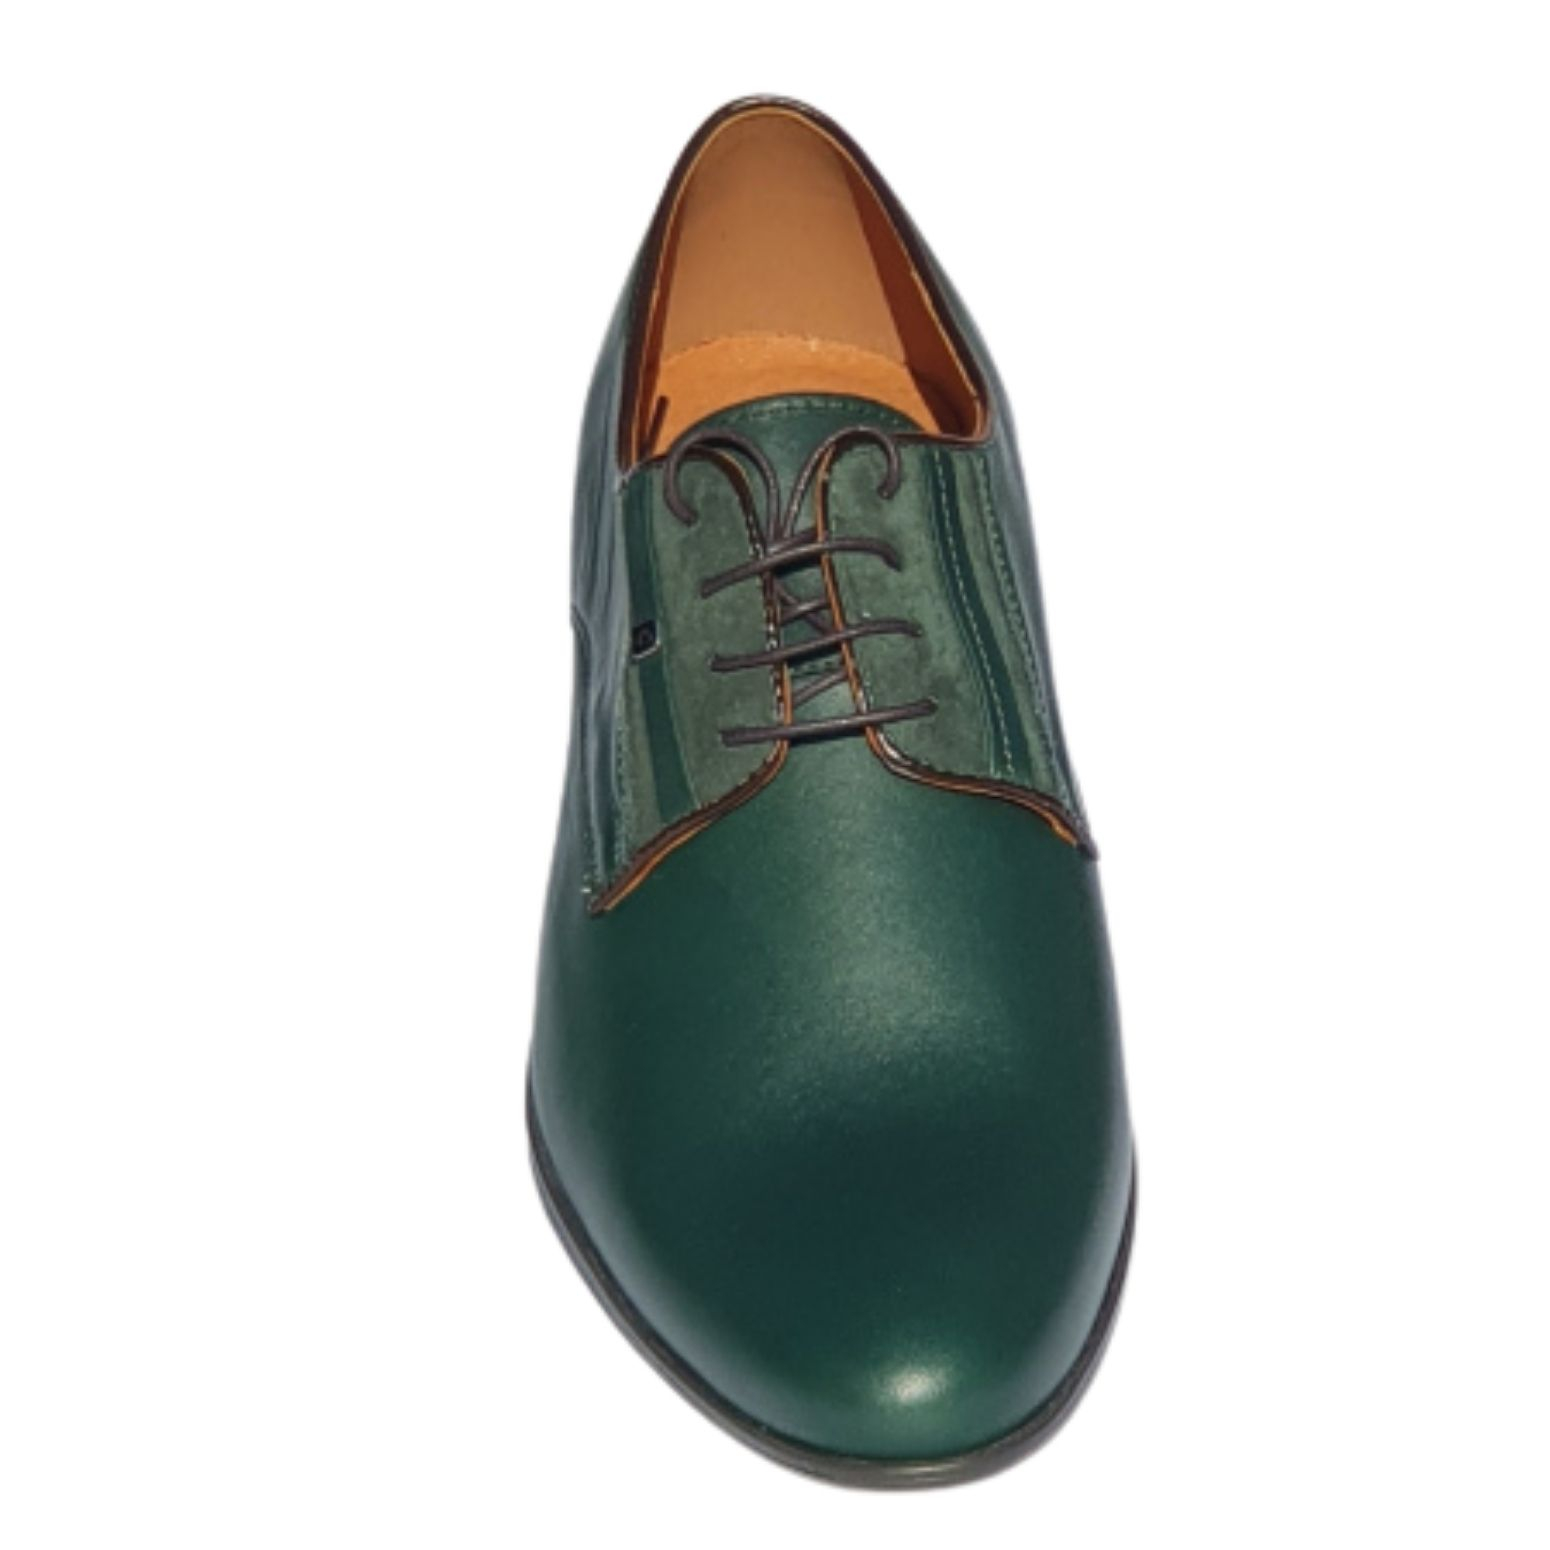 Secrete if Huh Pantofi eleganti barbatesti, din piele naturala, verde, Conhpol 4592